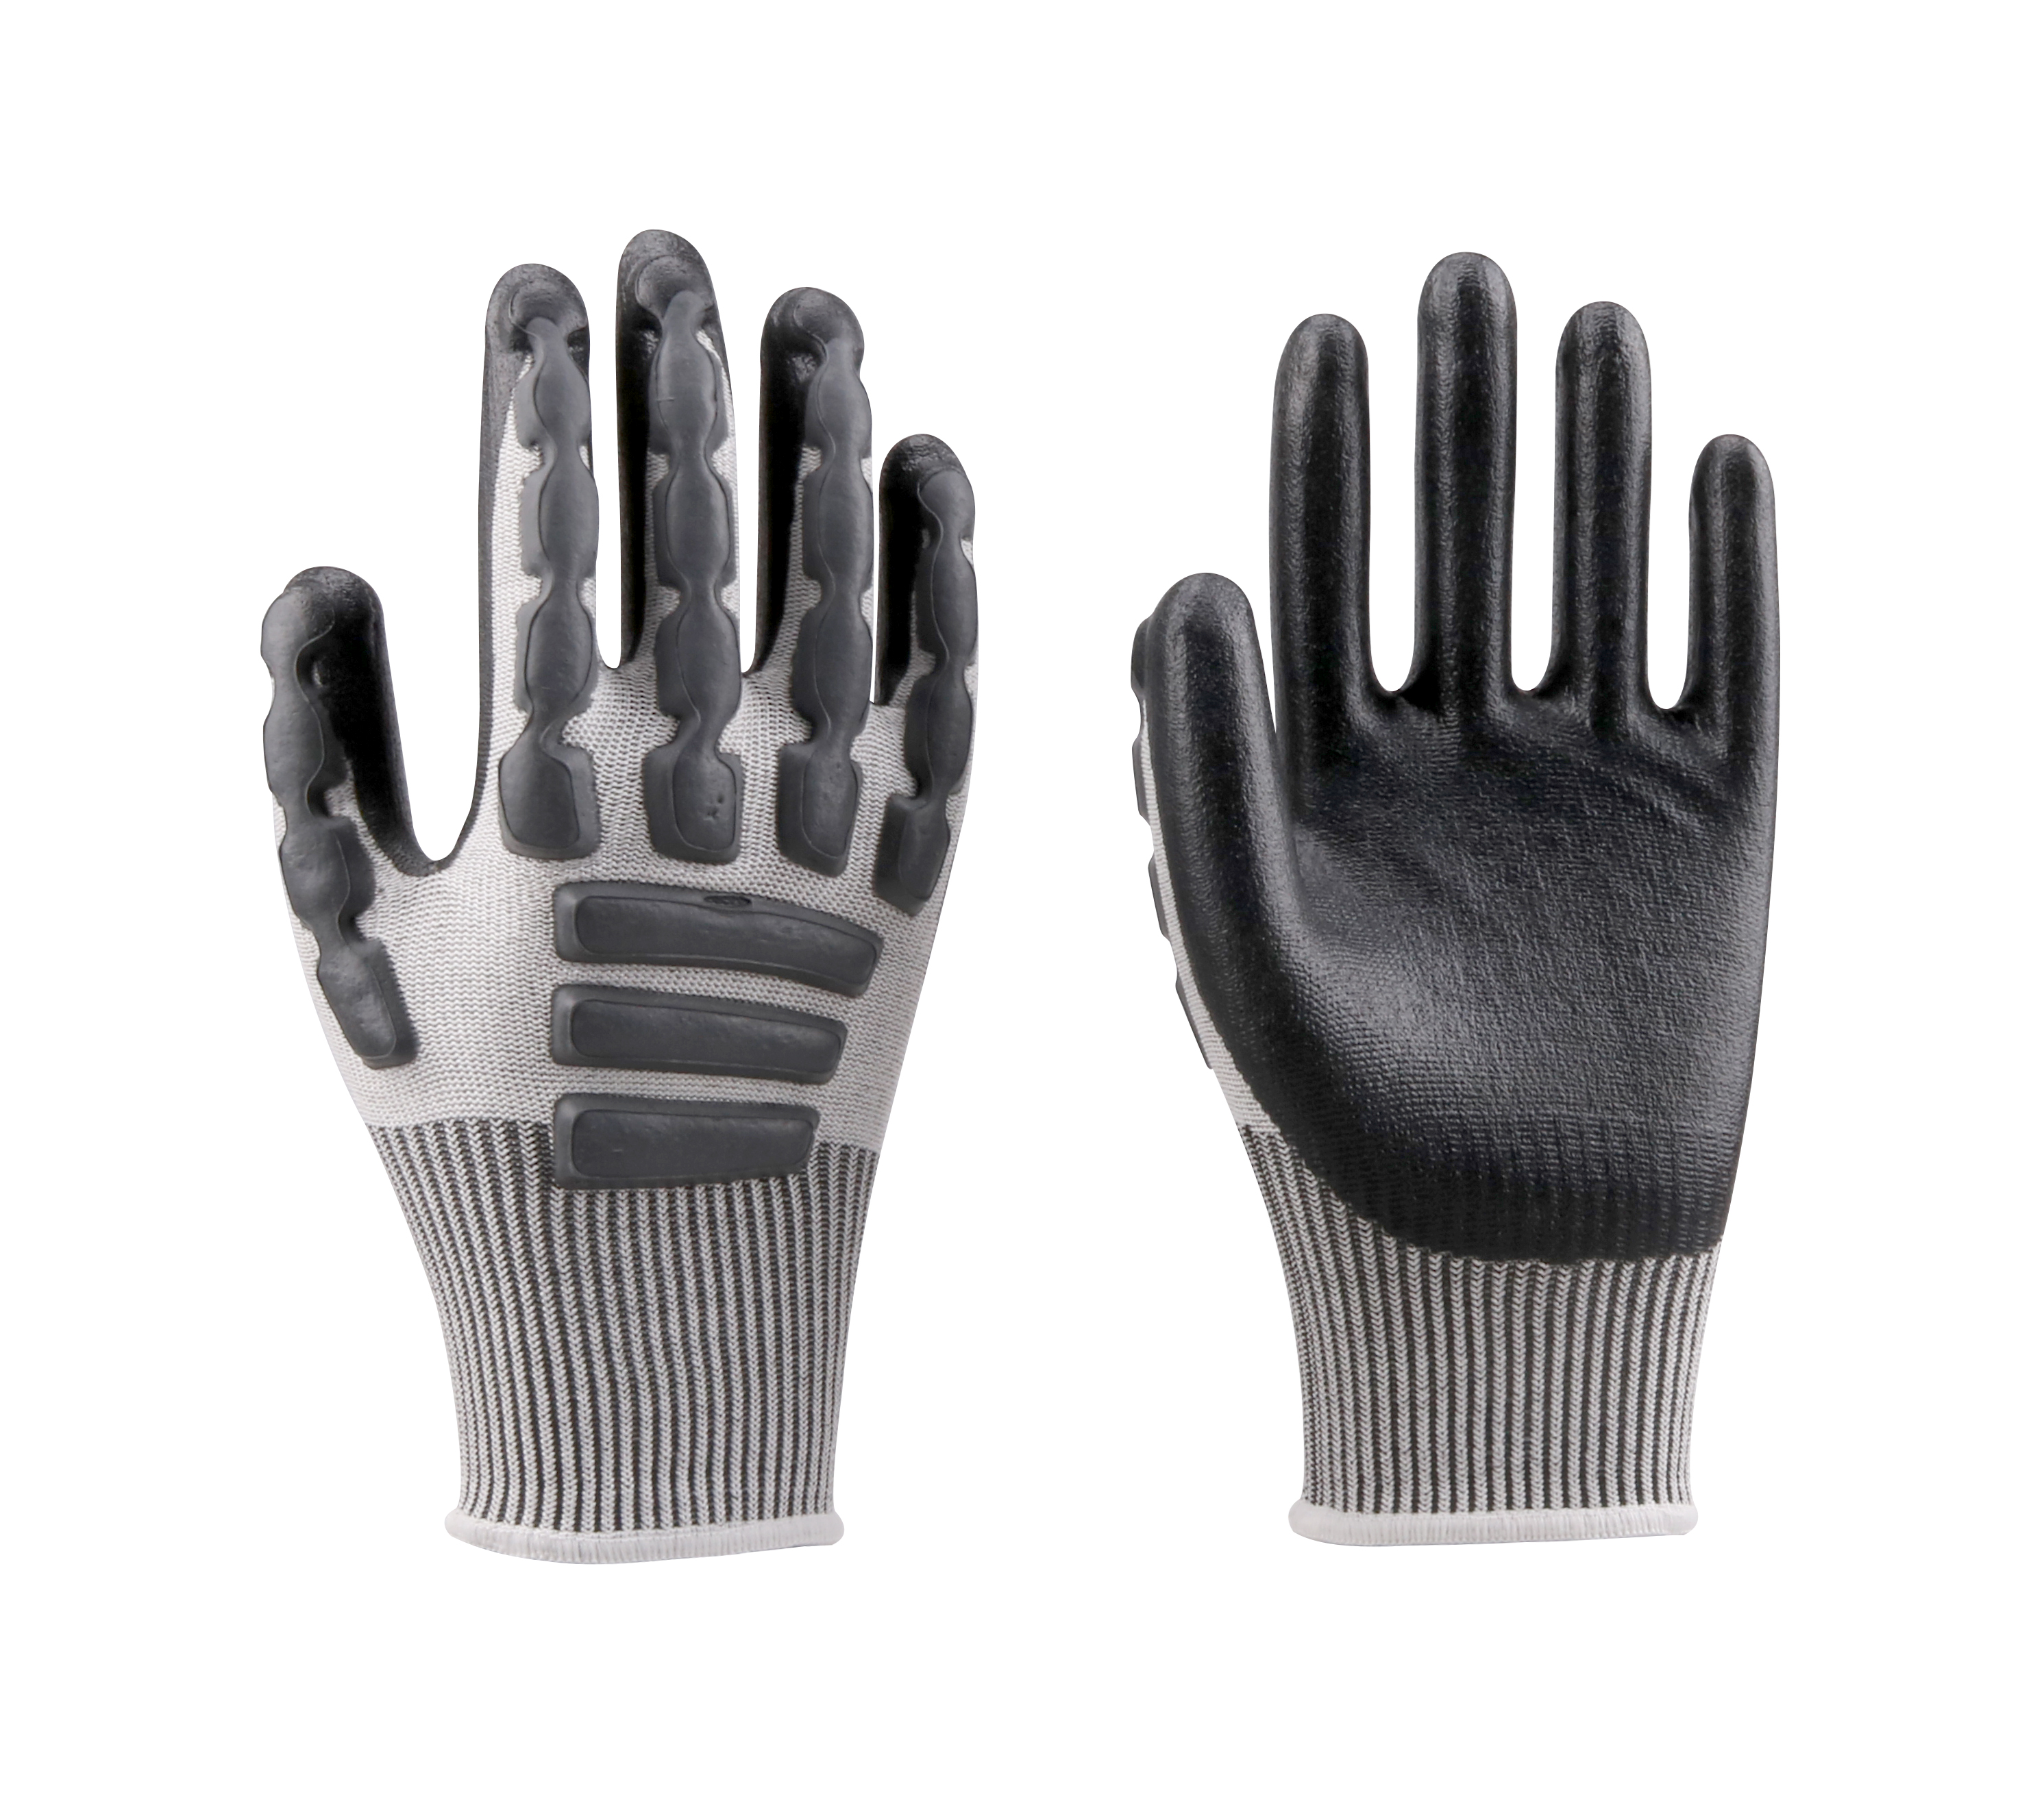  18 gauge HPPE Impact Resistant & Cut Resistant Gloves